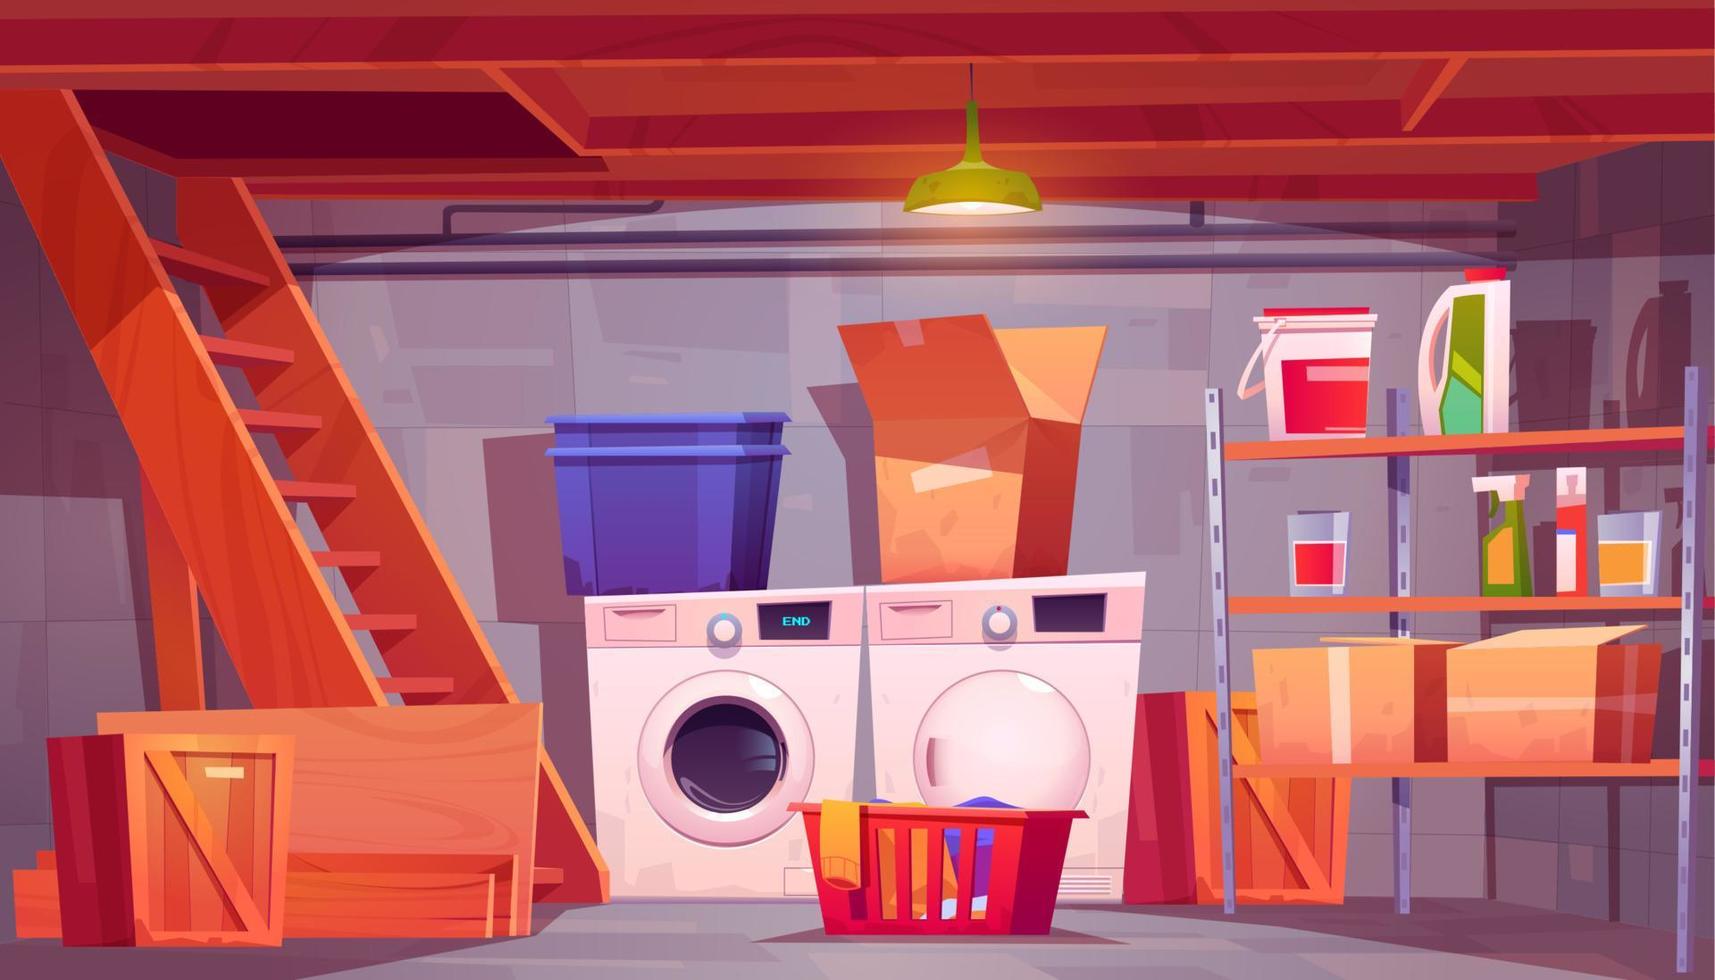 Laundry in basement, cartoon home cellar interior vector